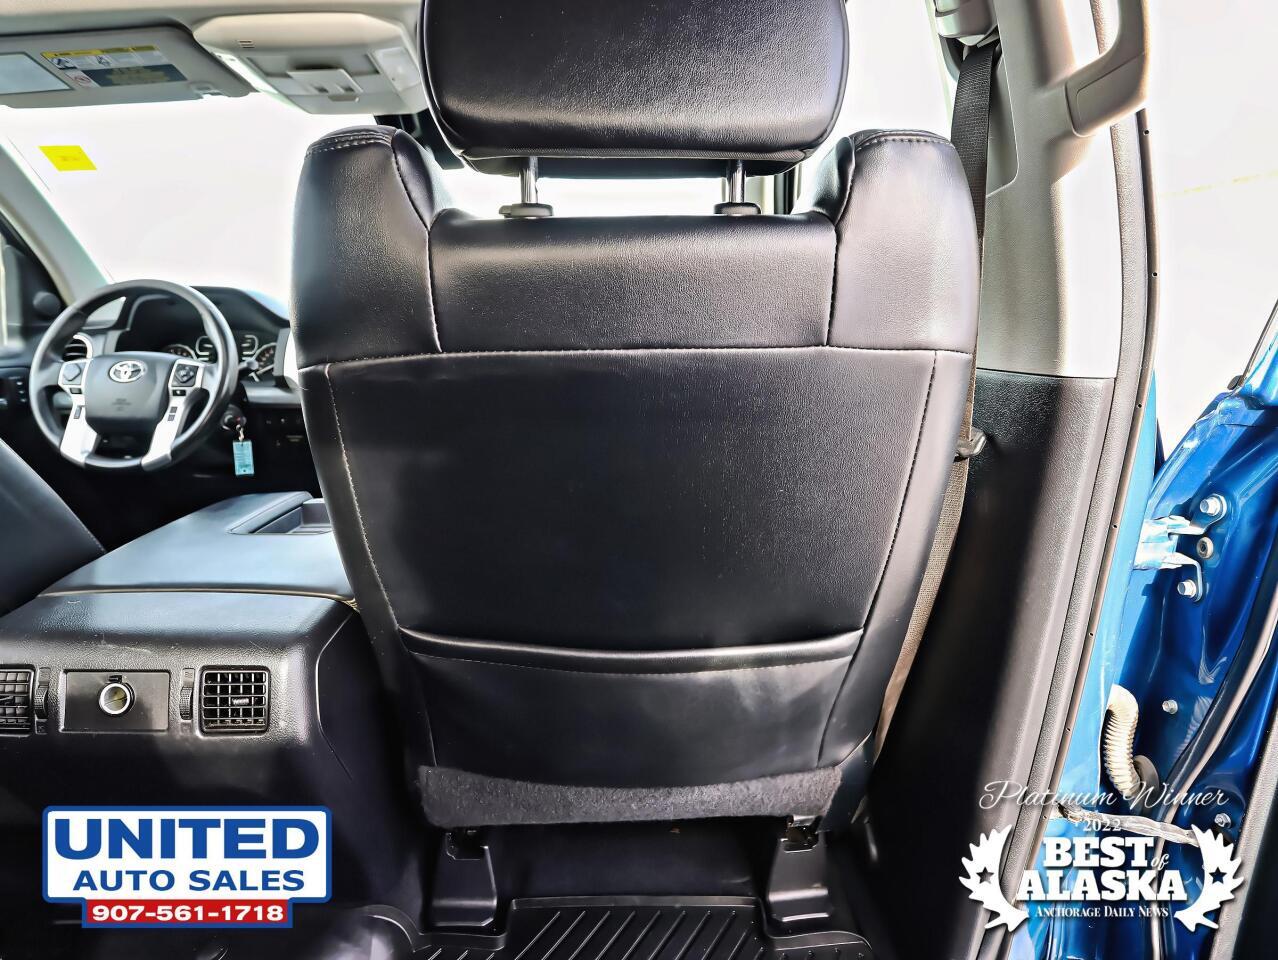 2018 Toyota Tundra Platinum 4x4 4dr CrewMax Cab Pickup SB (5.7L V8) 16